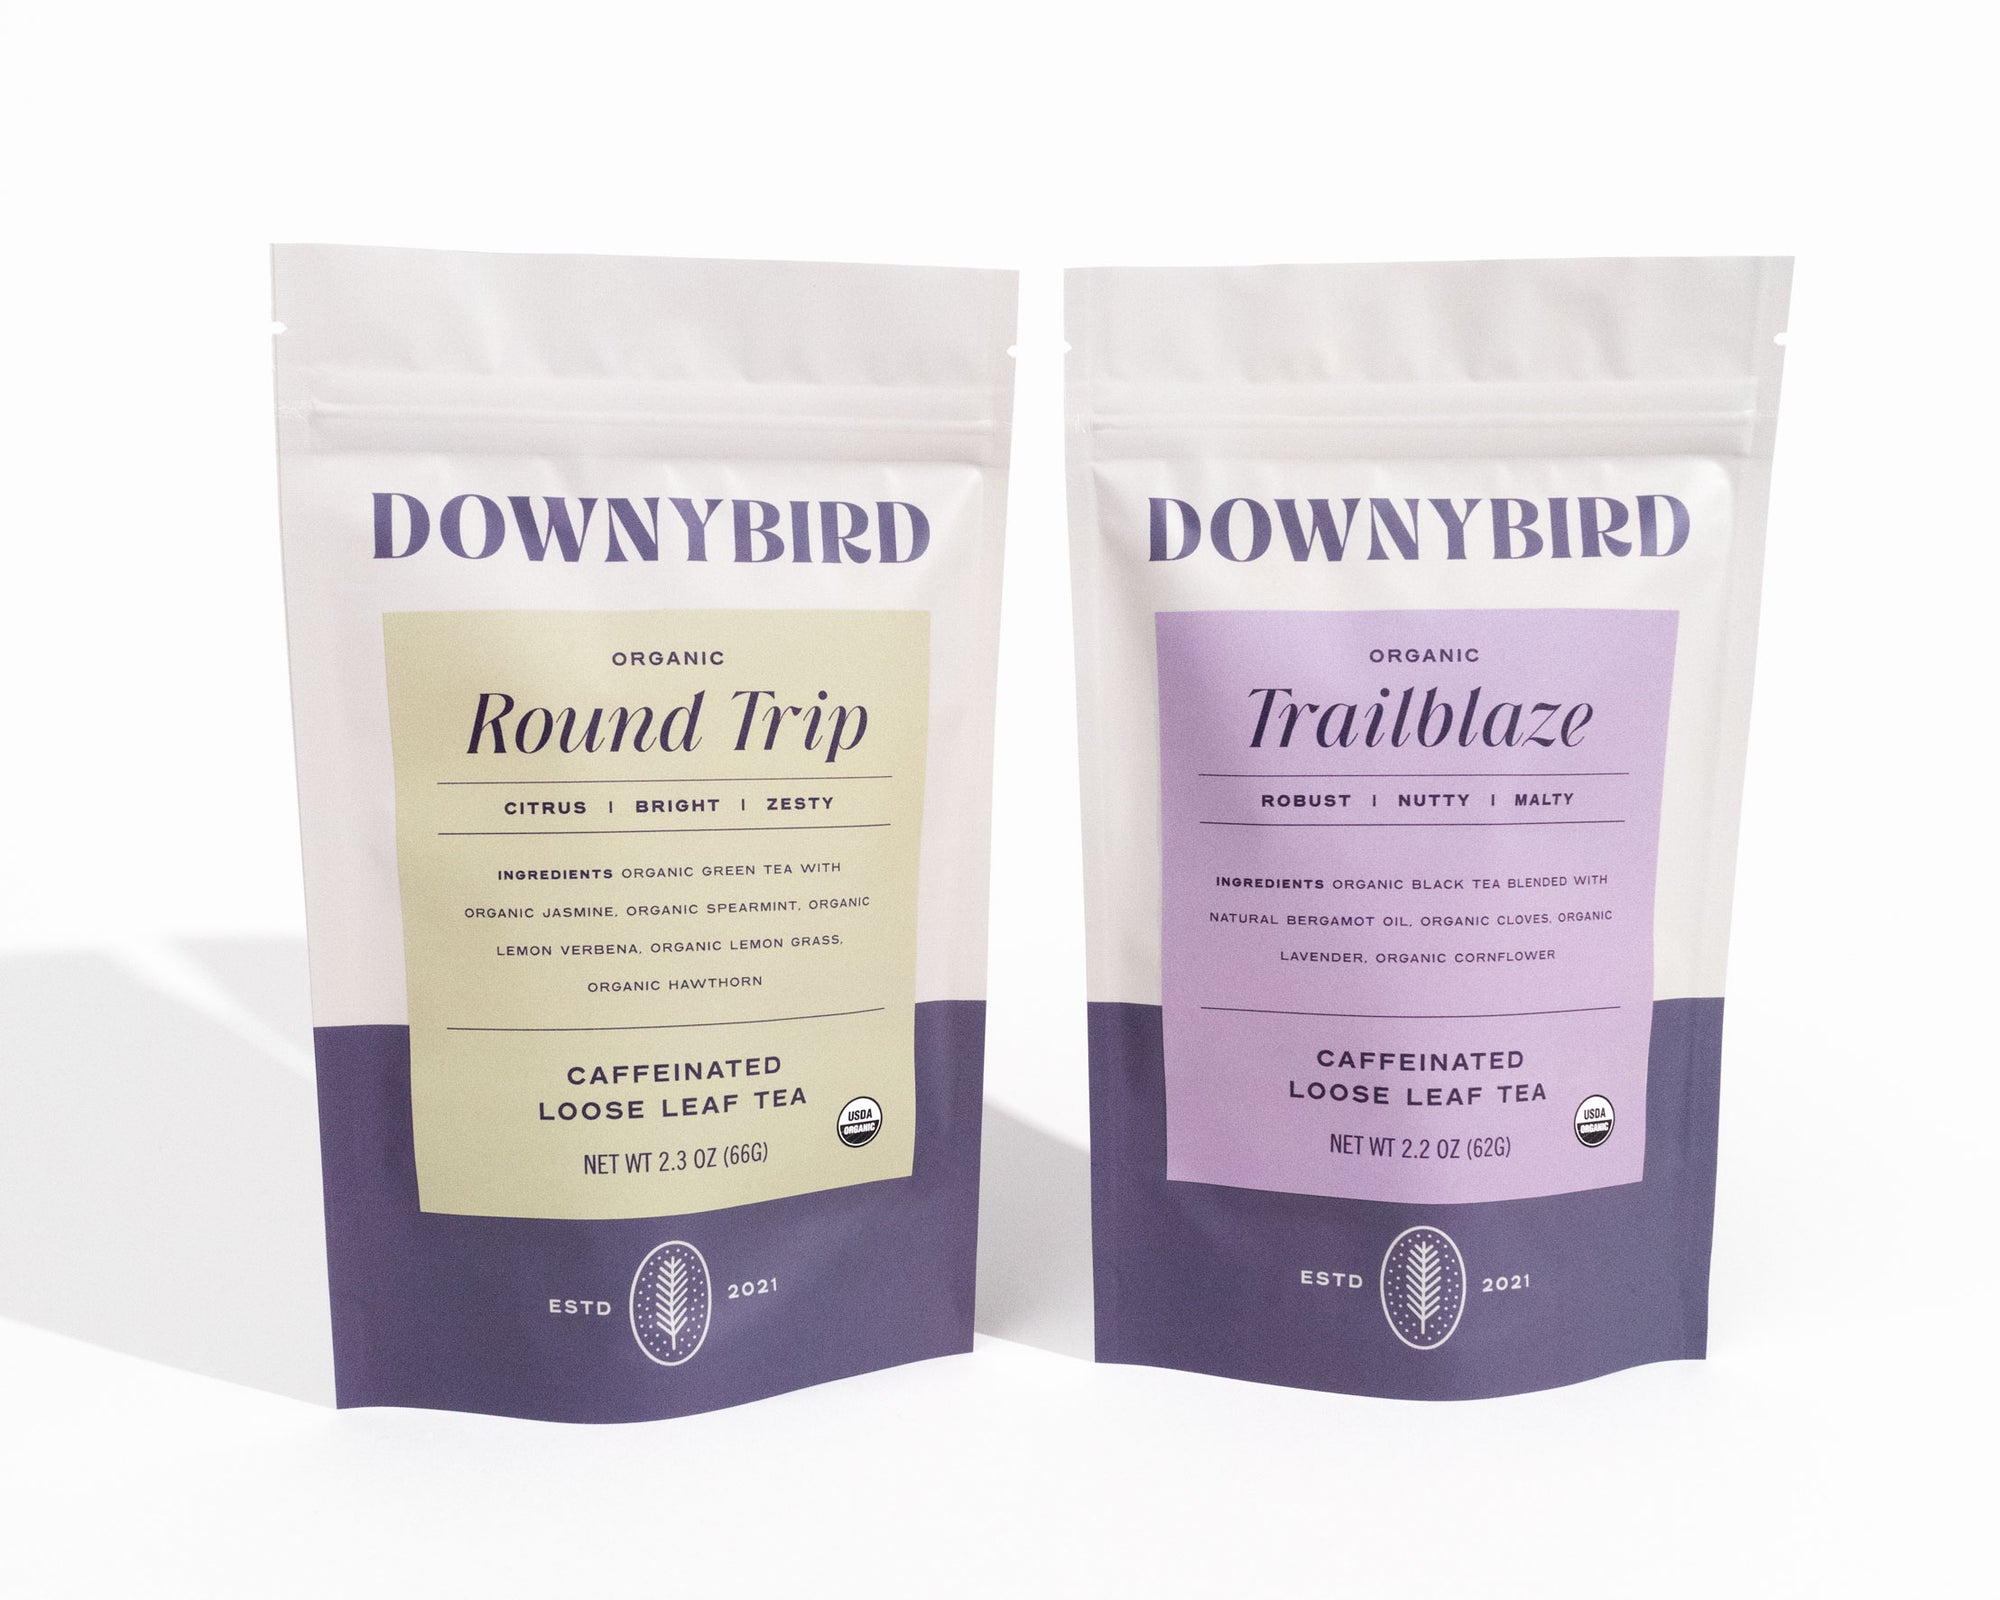 Jetsetter 2-Piece Bundle of Downybird Organic Loose Leaf Tea Blends including Round Trip Green Jasmine Tea and Trailblaze Earl Grey Tea